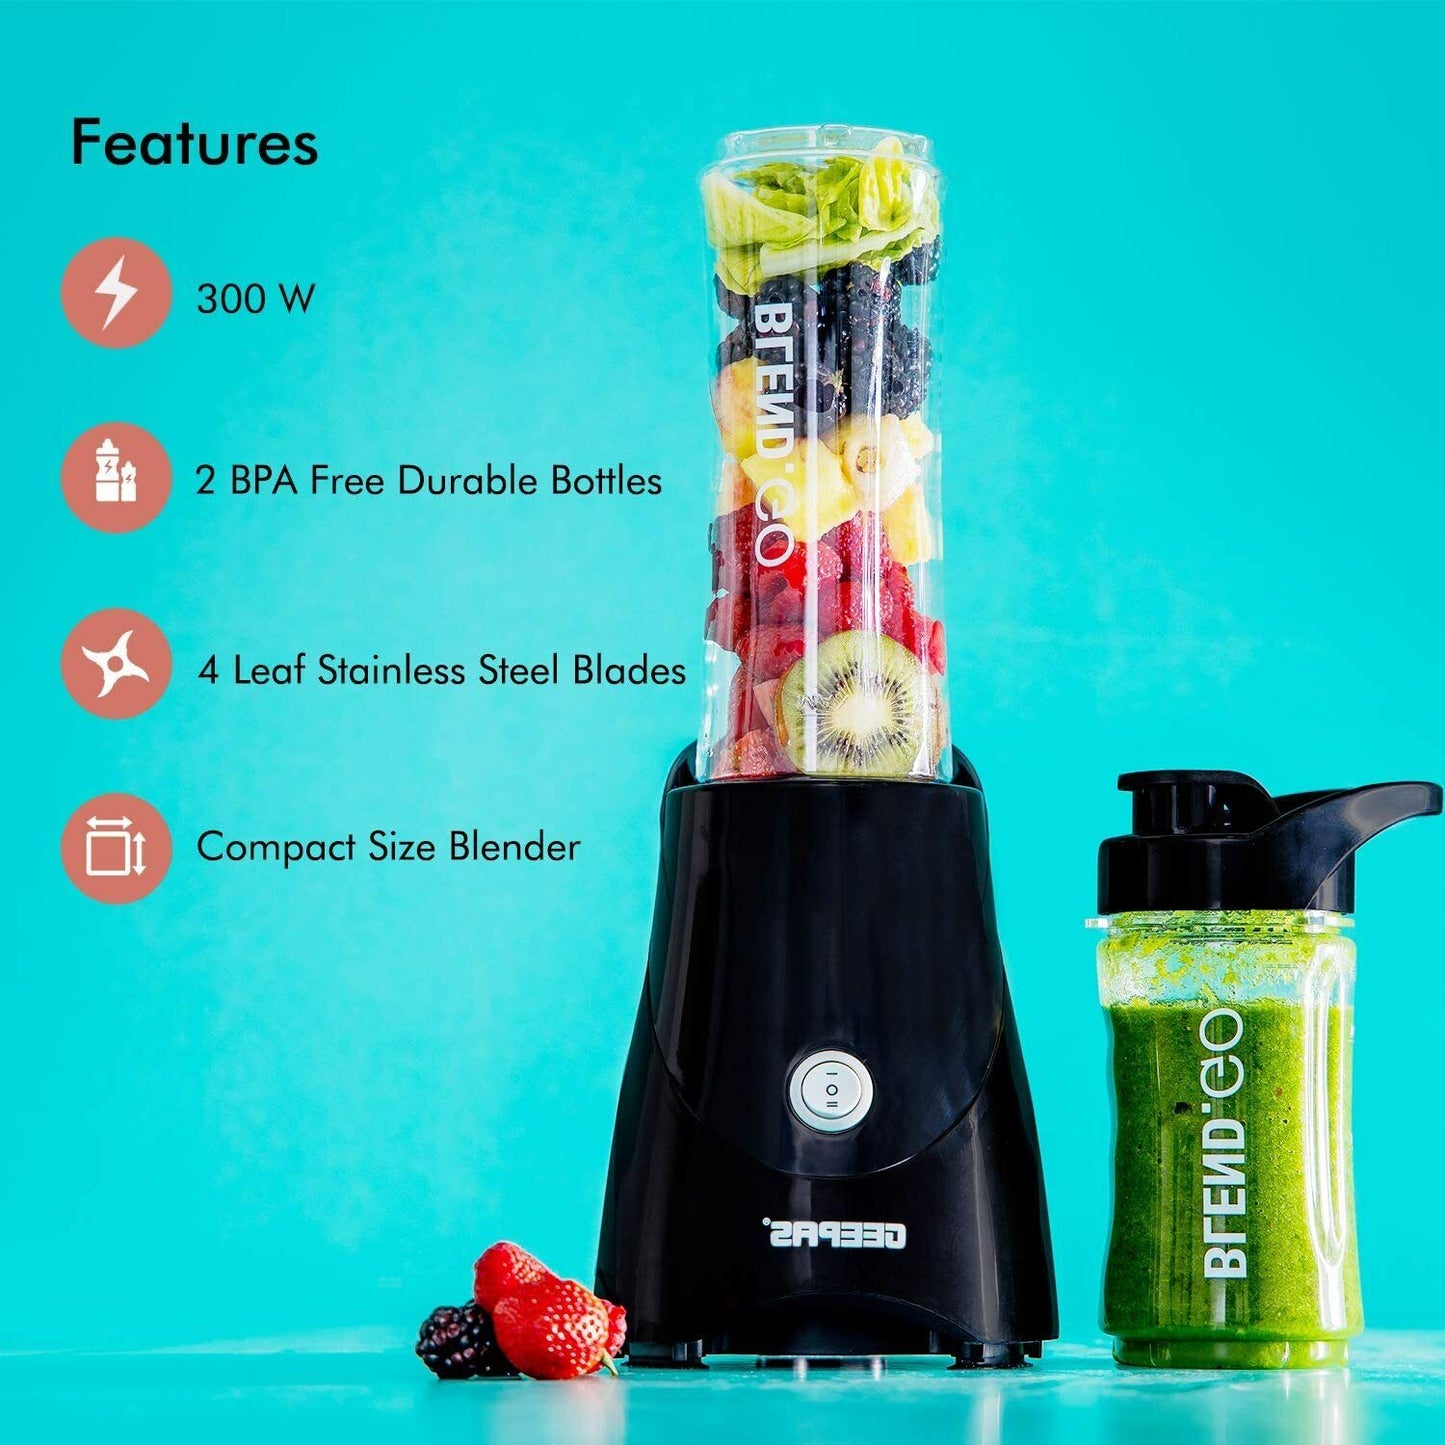 Geepas Milkshake Maker Blender Personal Sports Smoothie Protein Gym Bottles